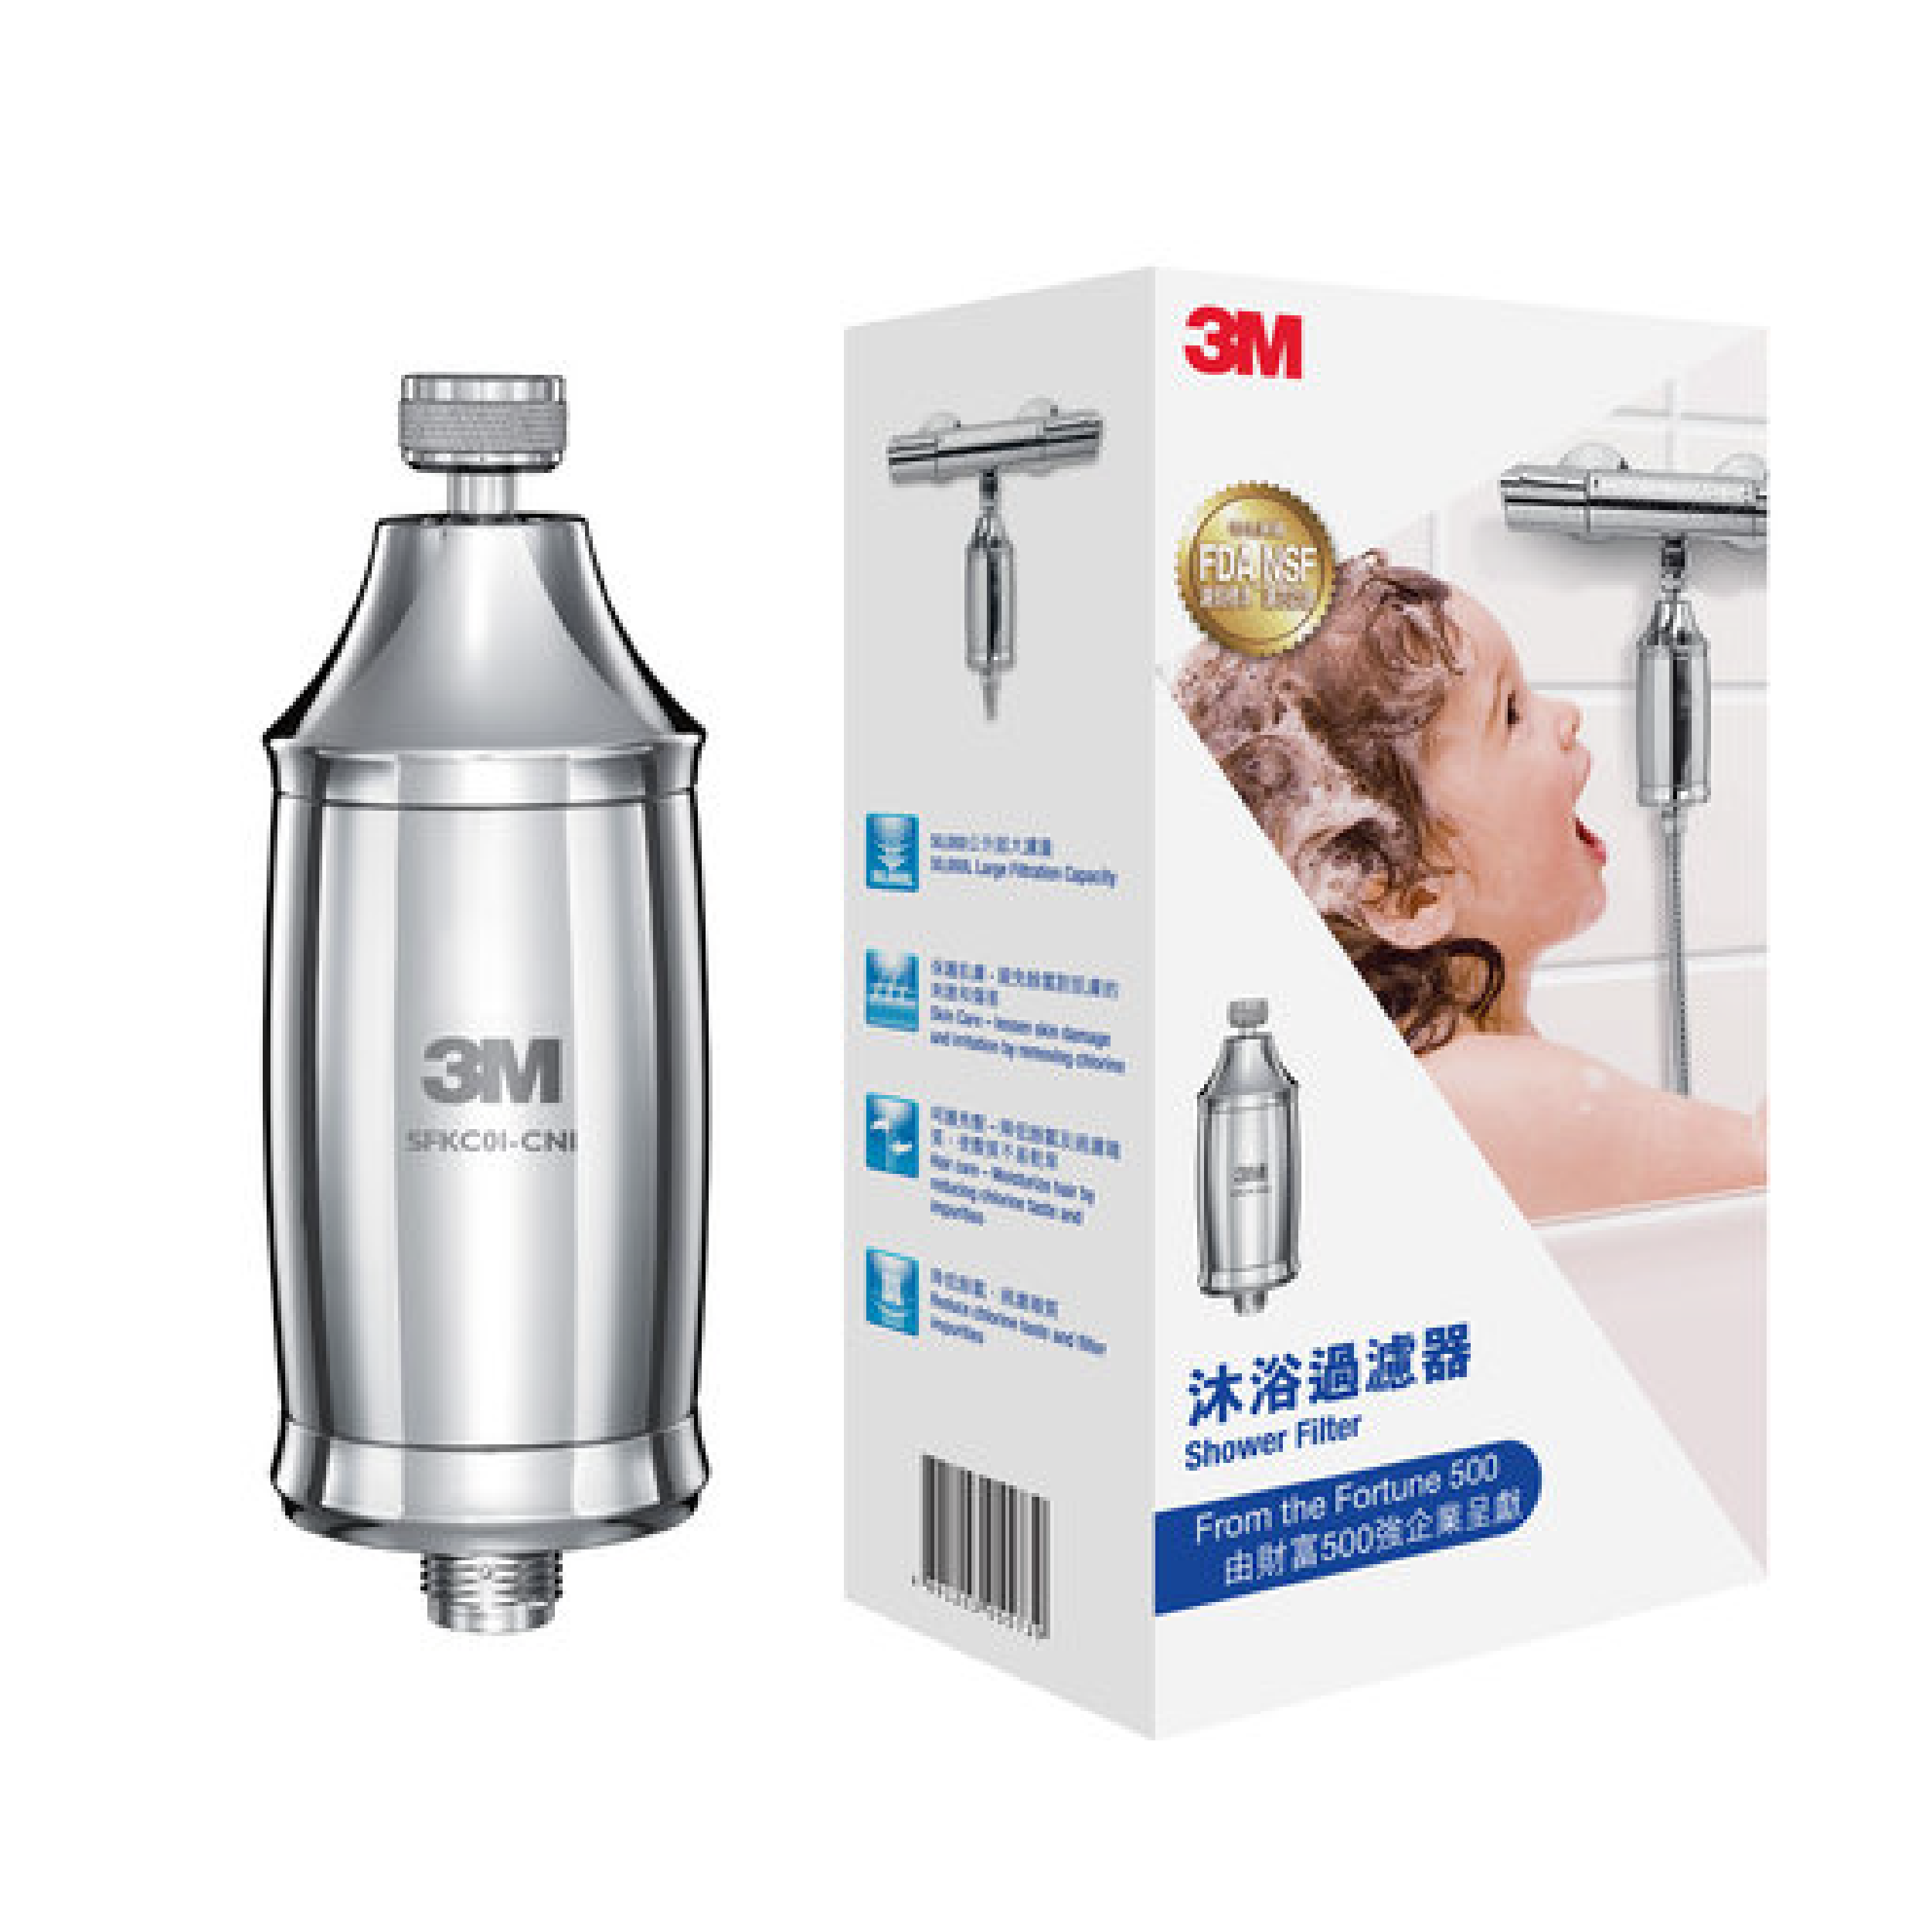 3M™ SFKC01-CN1 沐浴過濾器套裝【香港行貨】 - Five 1 Store